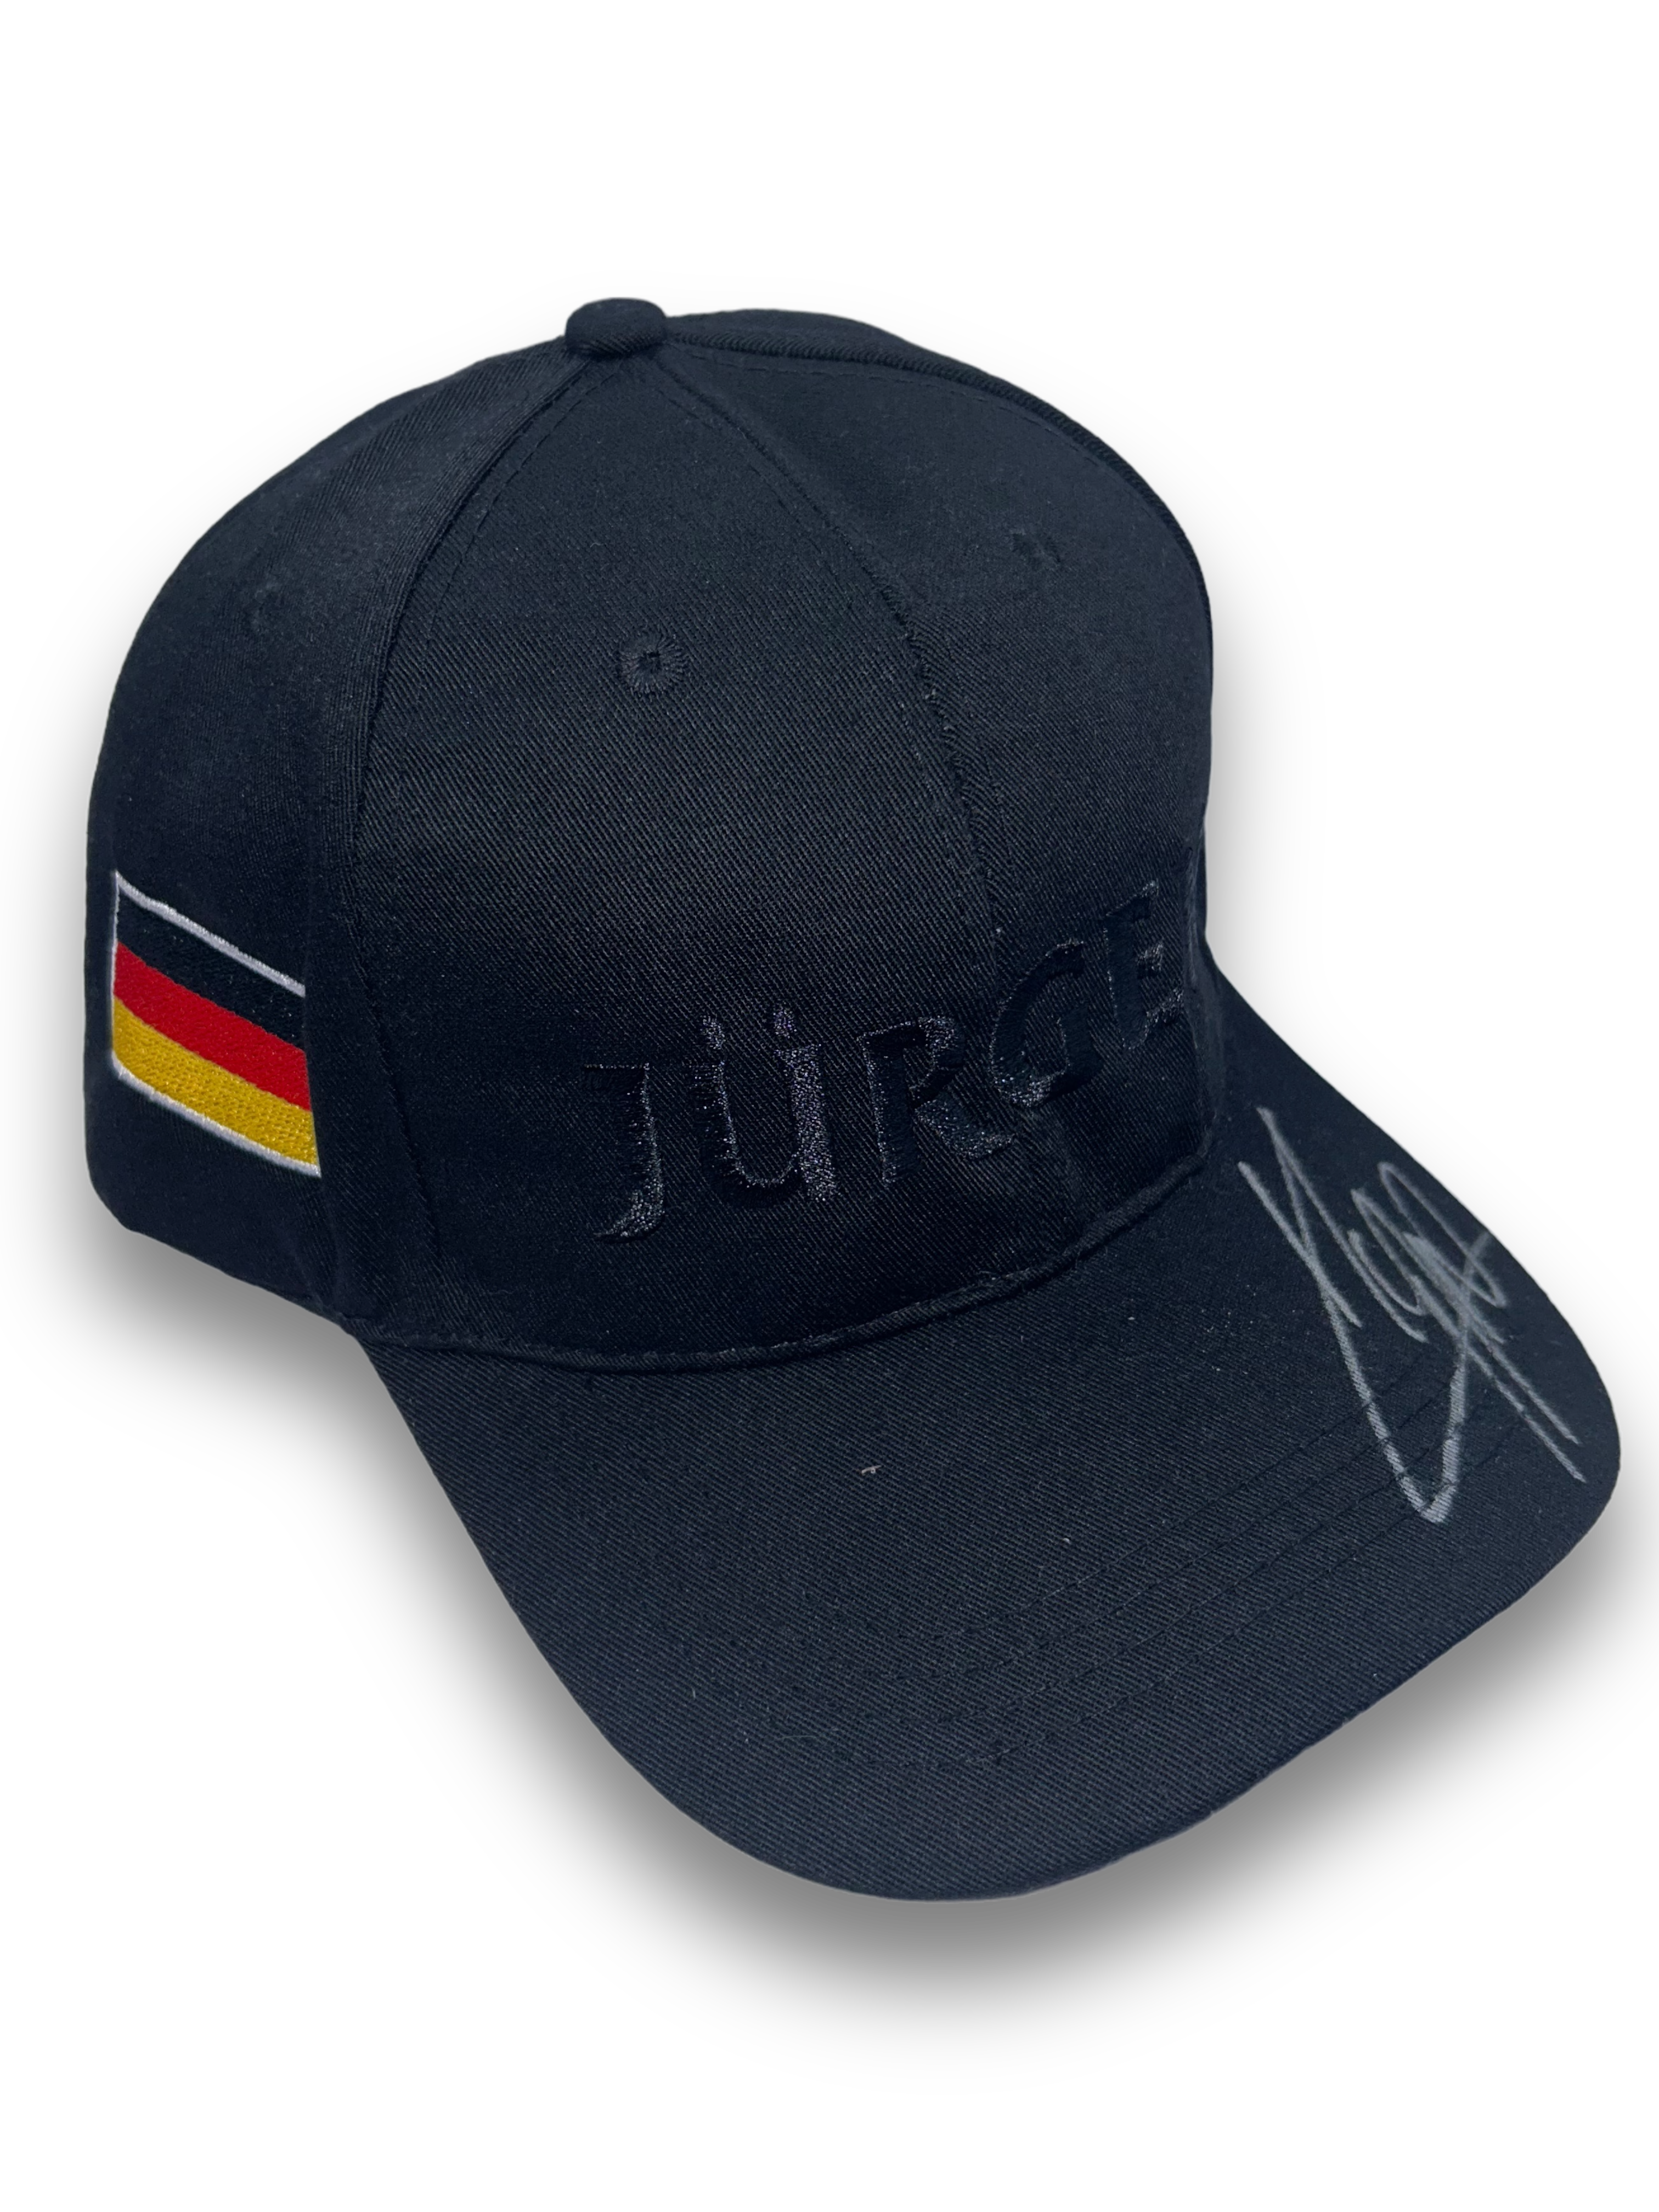 JURGEN KLOPP SIGNED LIVERPOOL FC JURGEN GERMANY CAP (AFTAL COA)